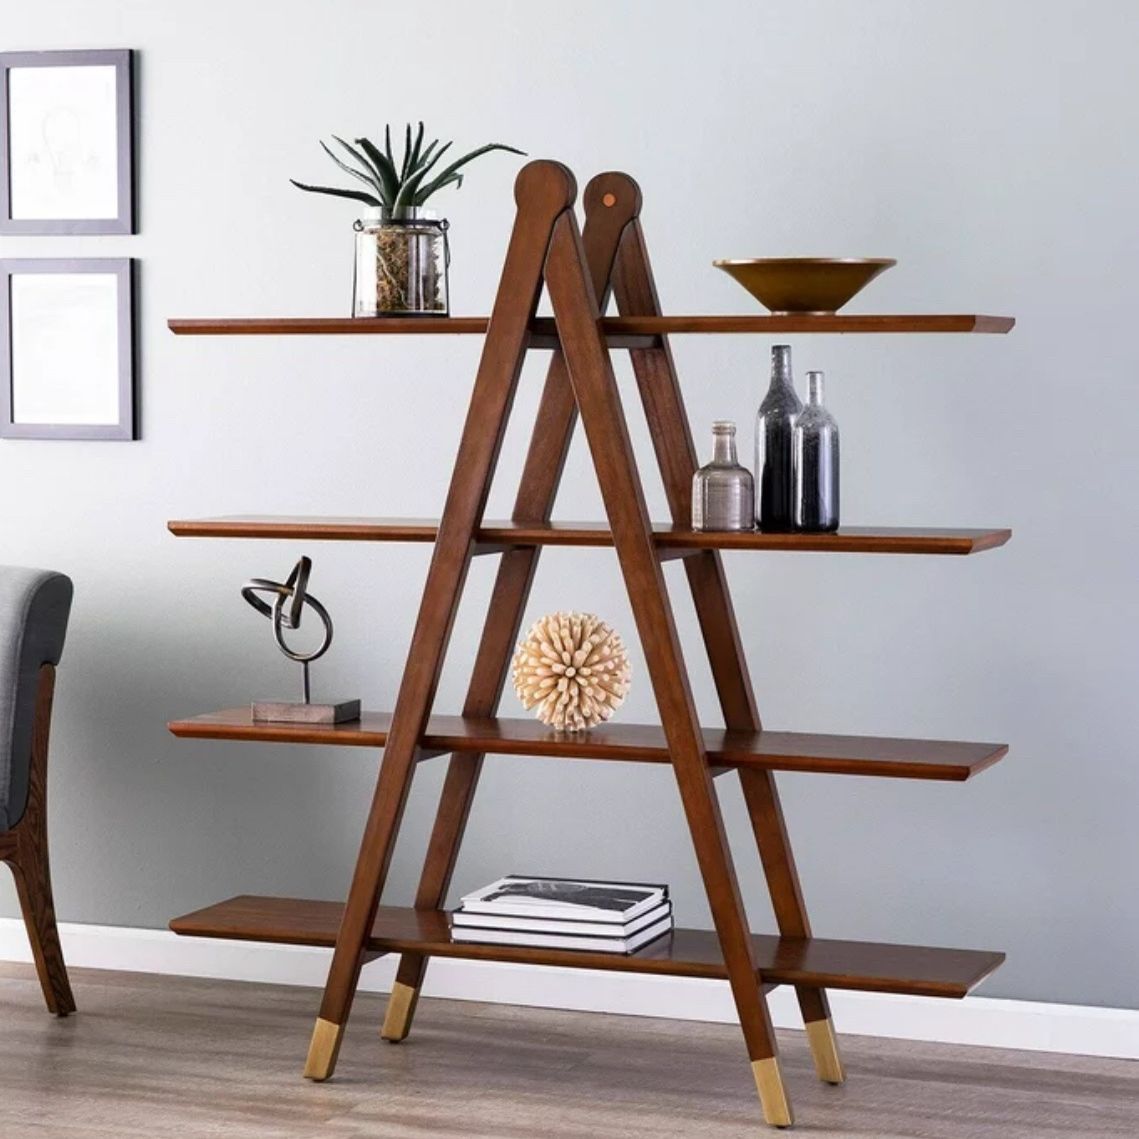 Ladder shelf - $399 OBO, Excellent condition